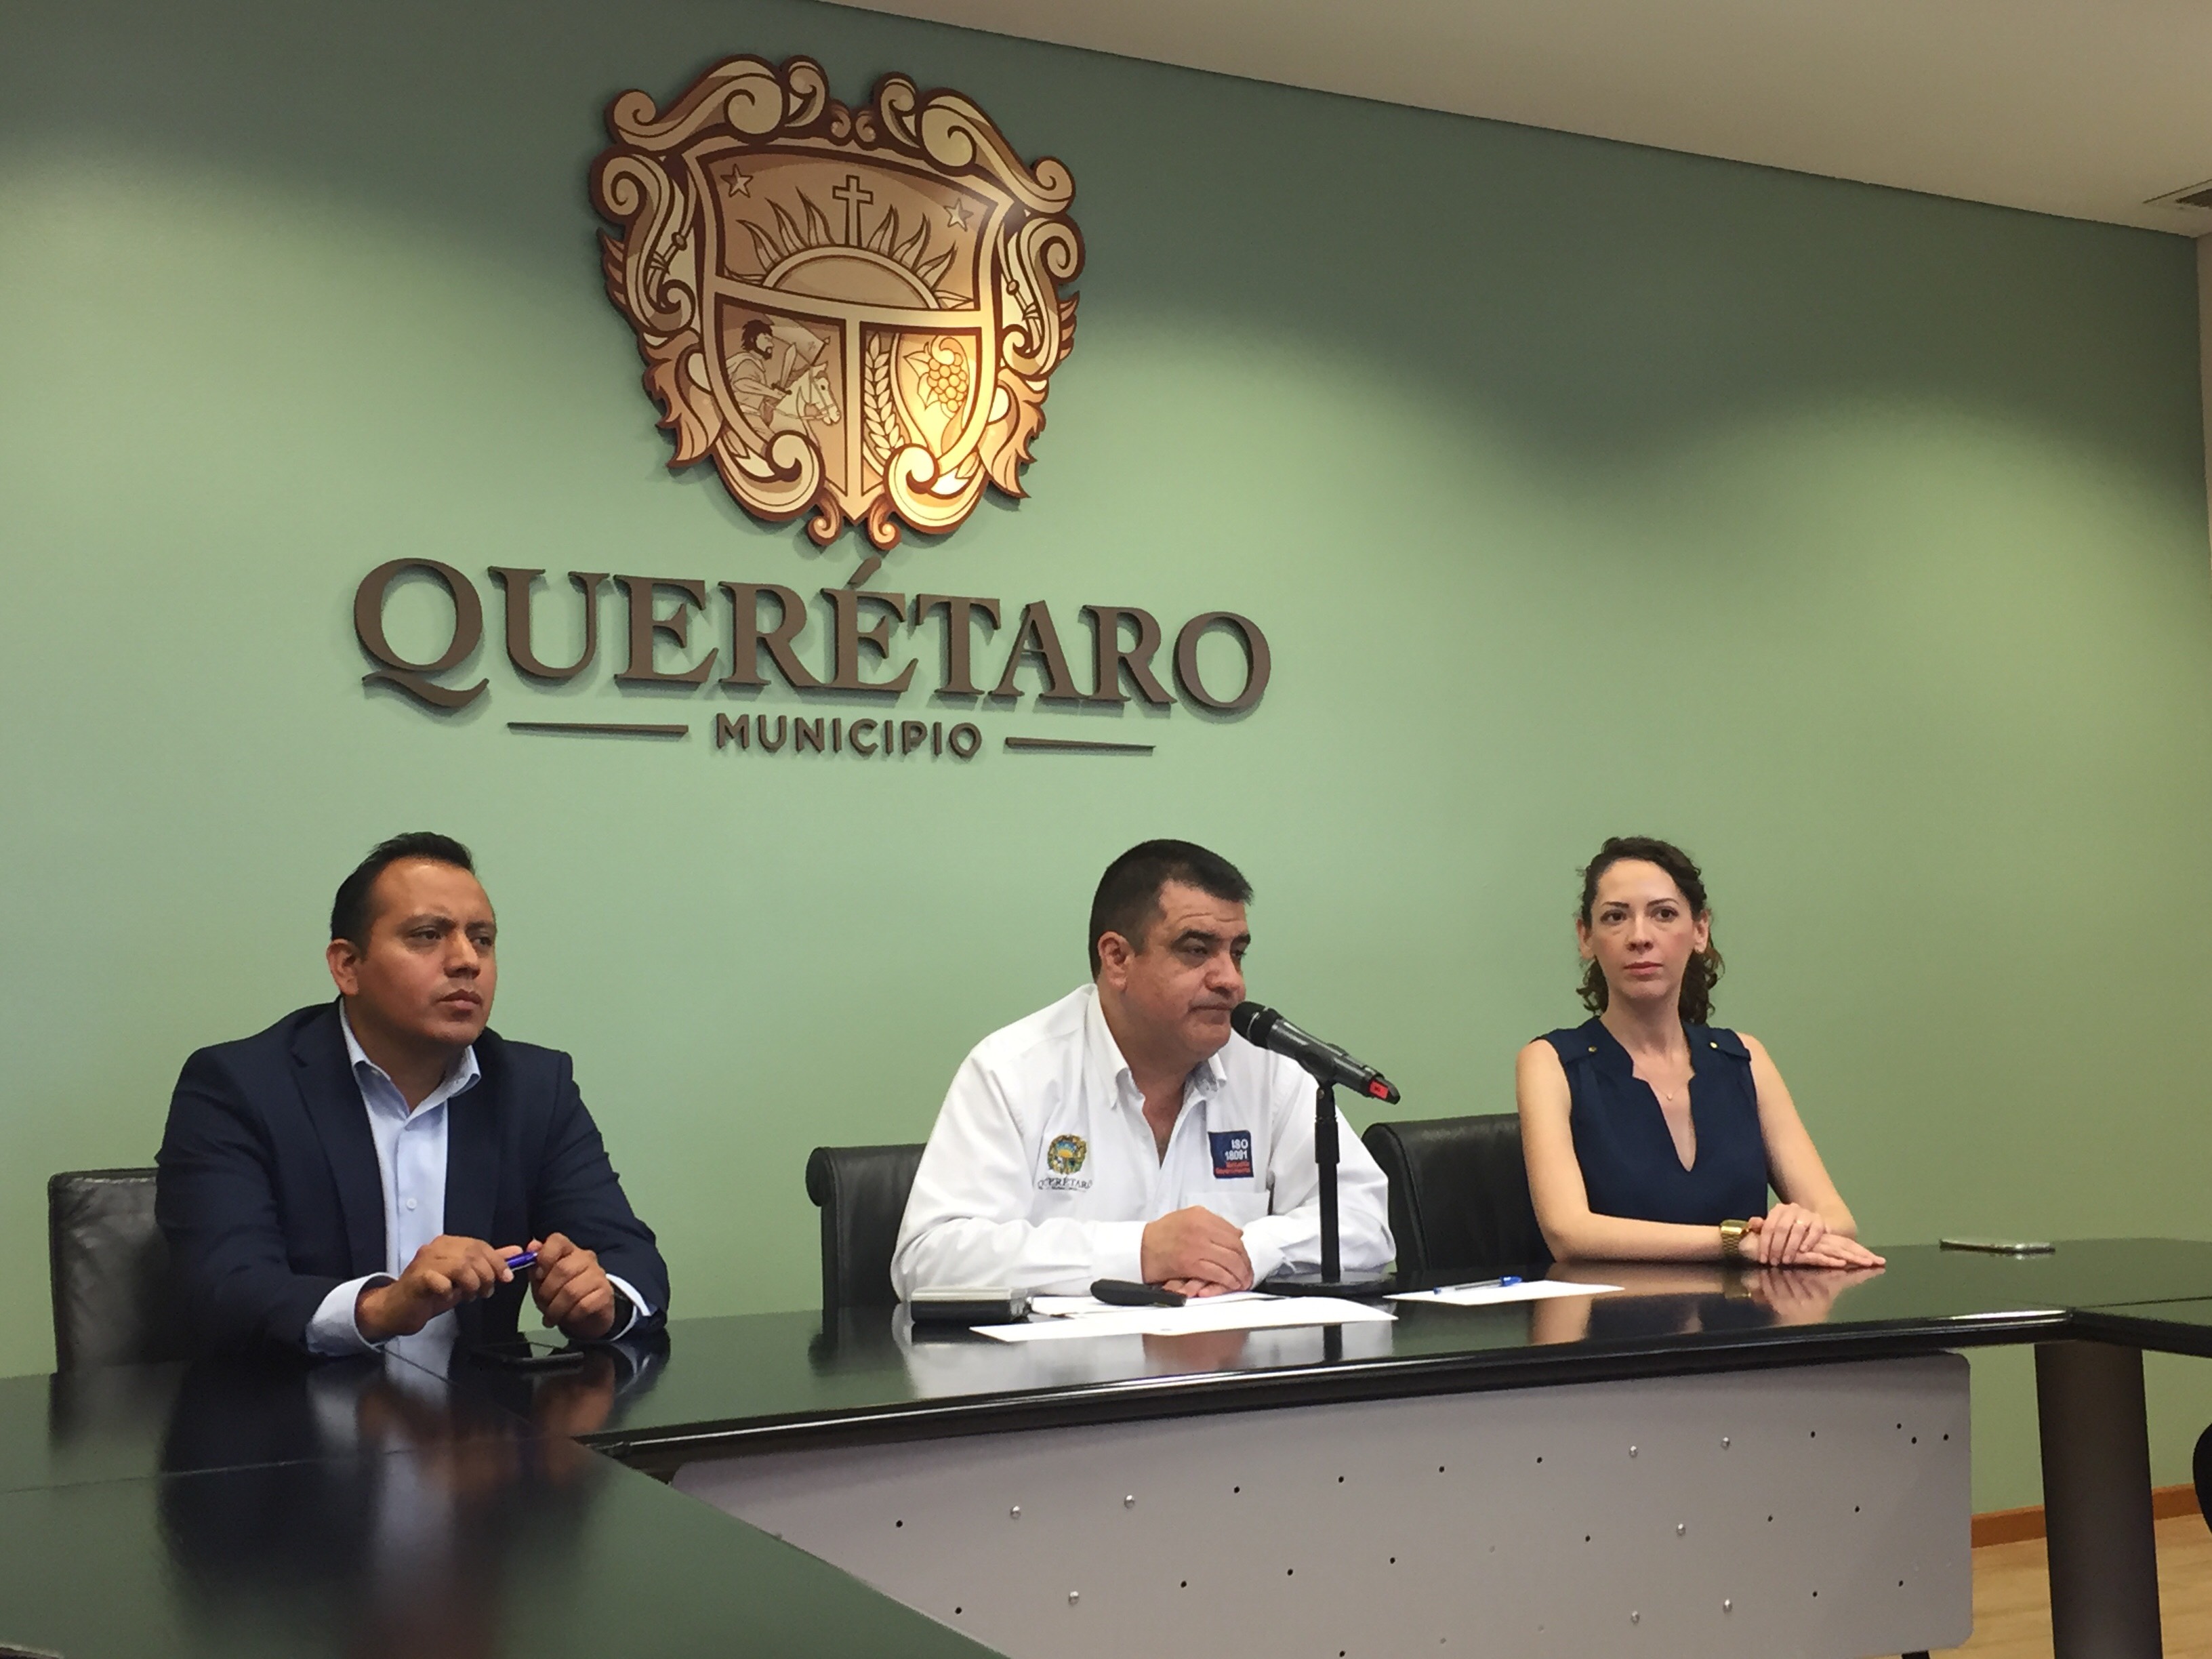  Municipio de Querétaro recibe reconocimiento internacional como gobierno confiable nivel 2